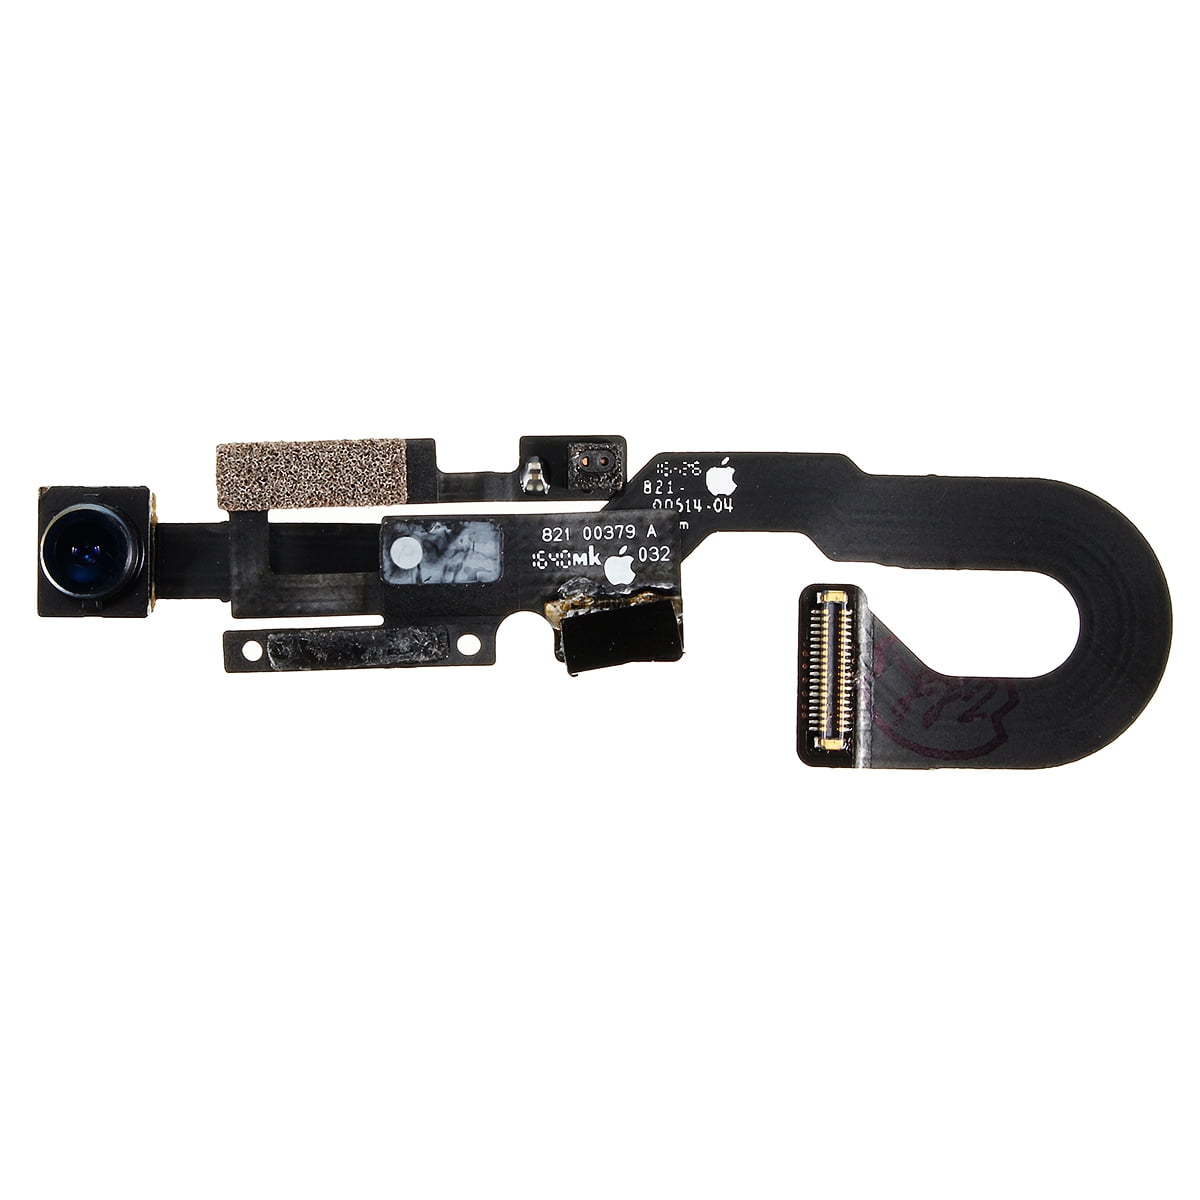 Front Facing Selfie Camera Proximity Light Sensor Flex Cable for iPhone 7 Plus 5.5